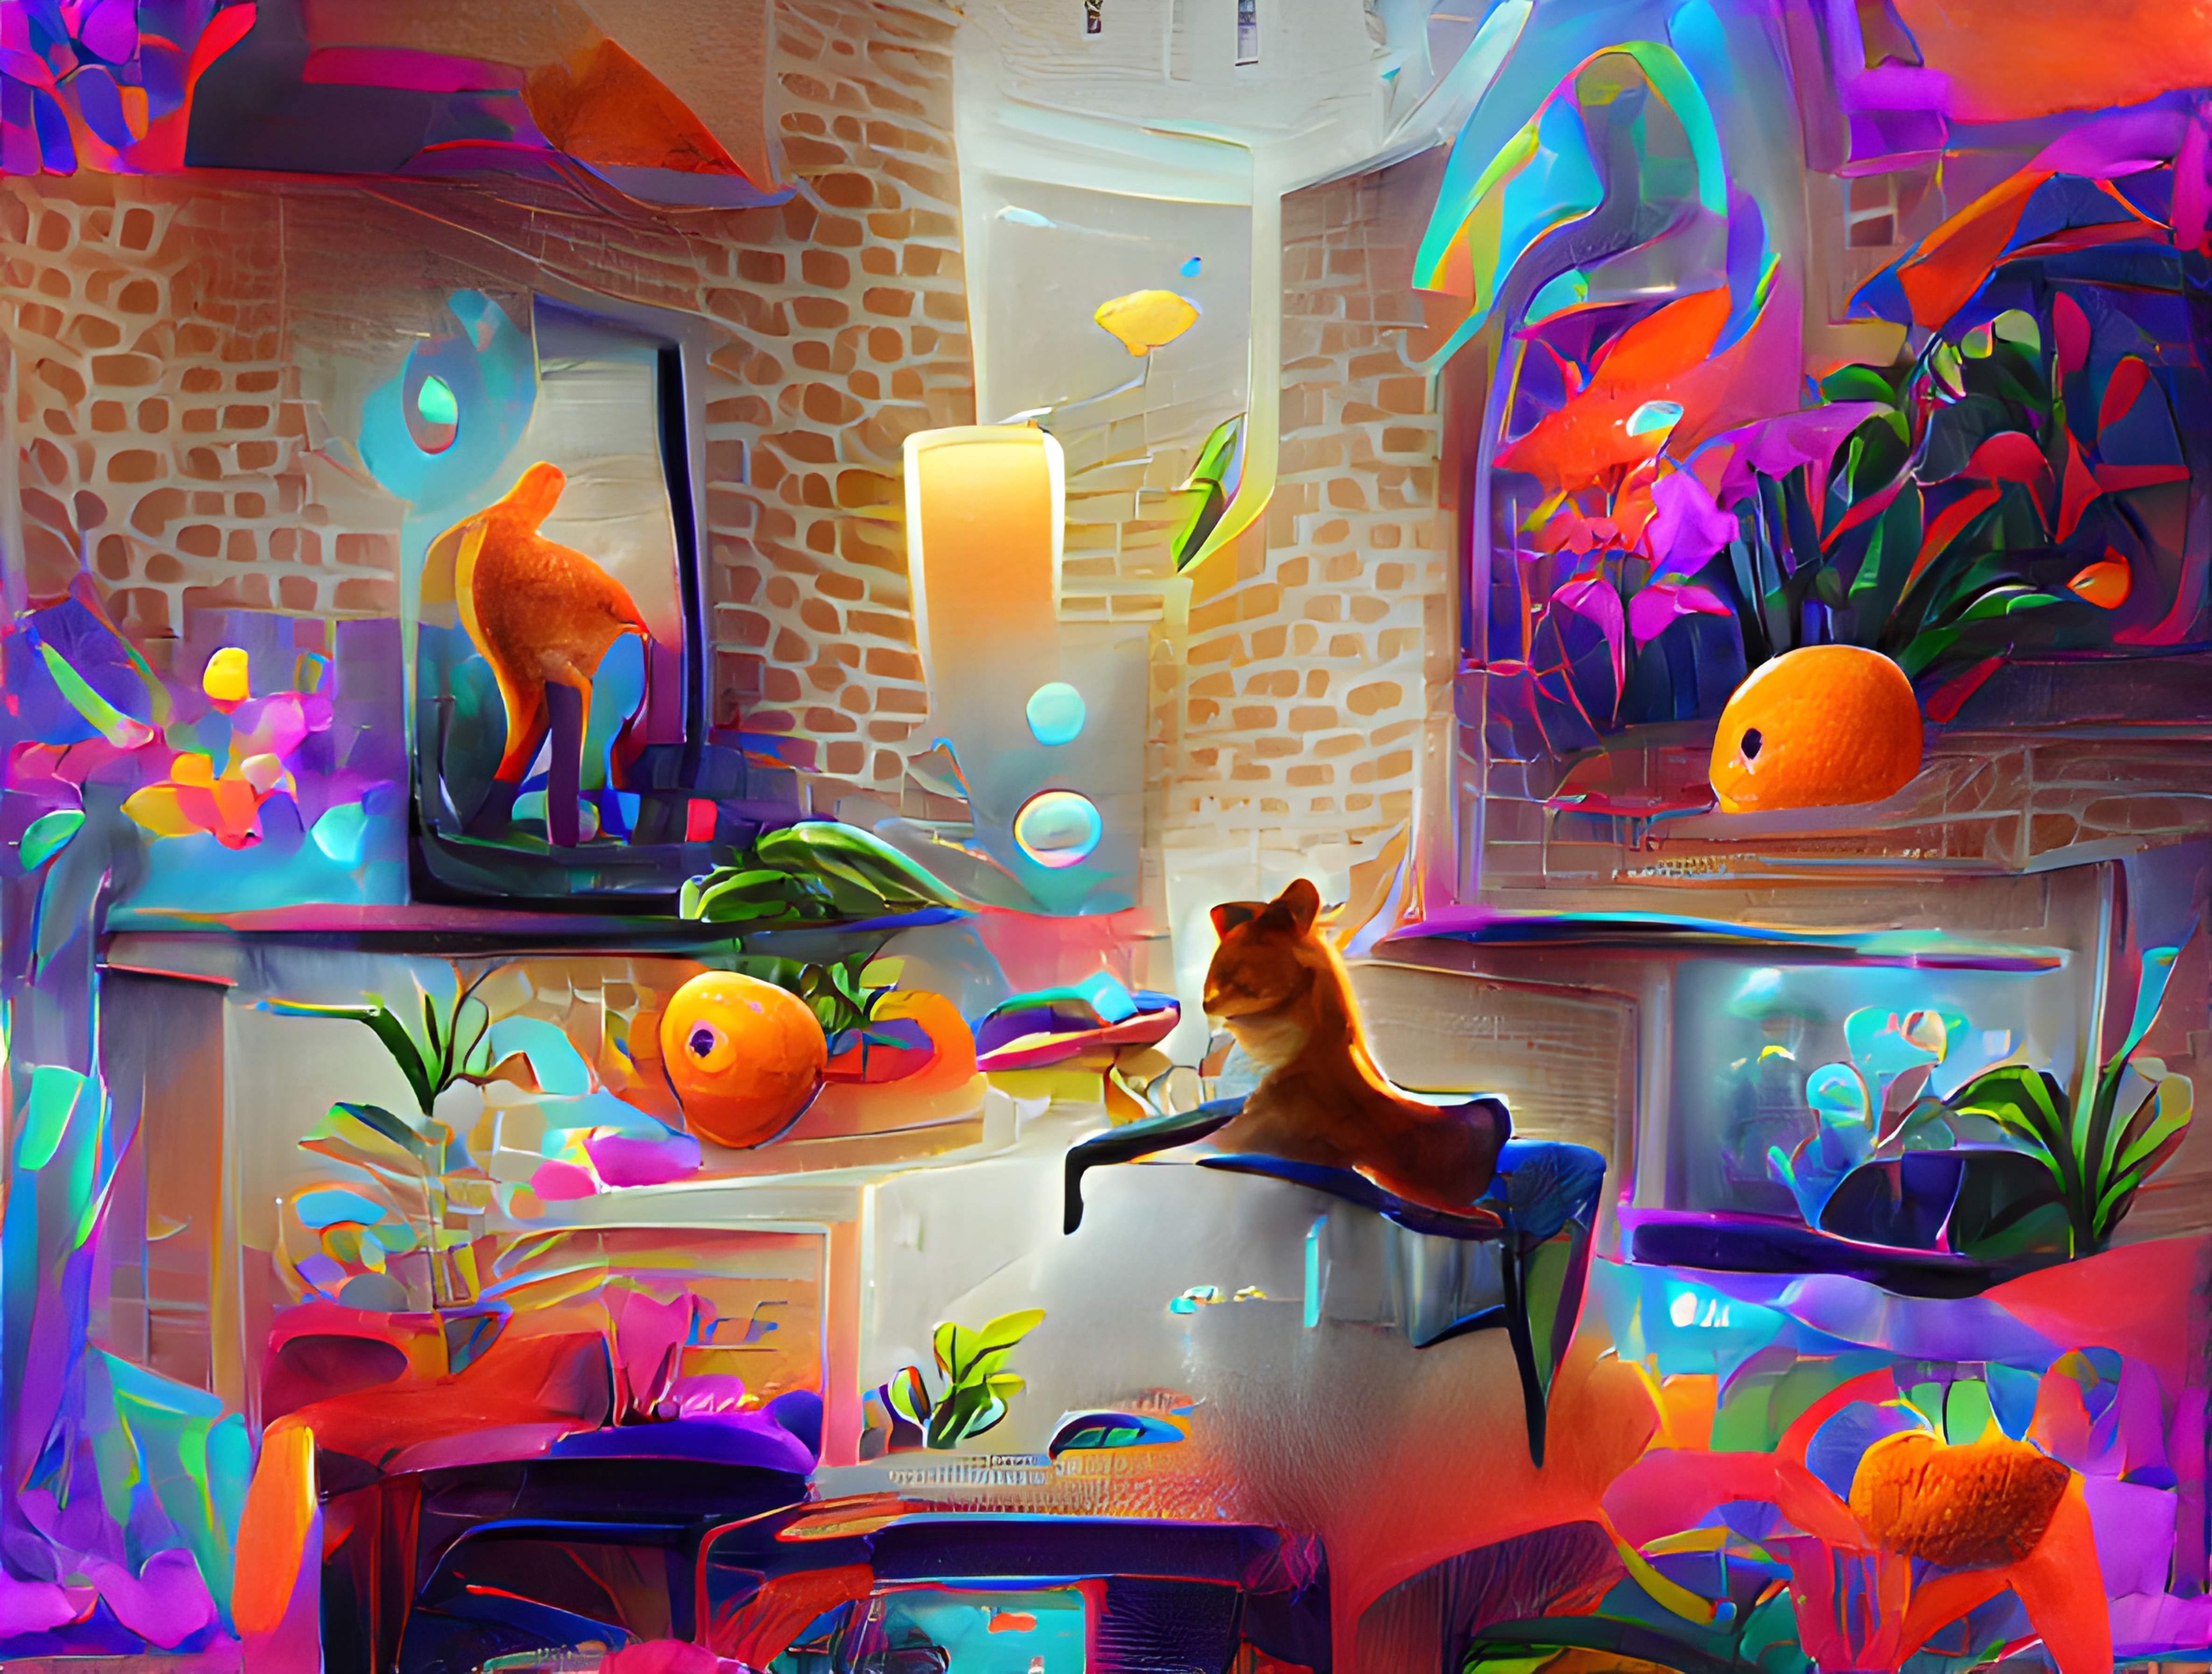 Hey Goldfish, We’re Friends!